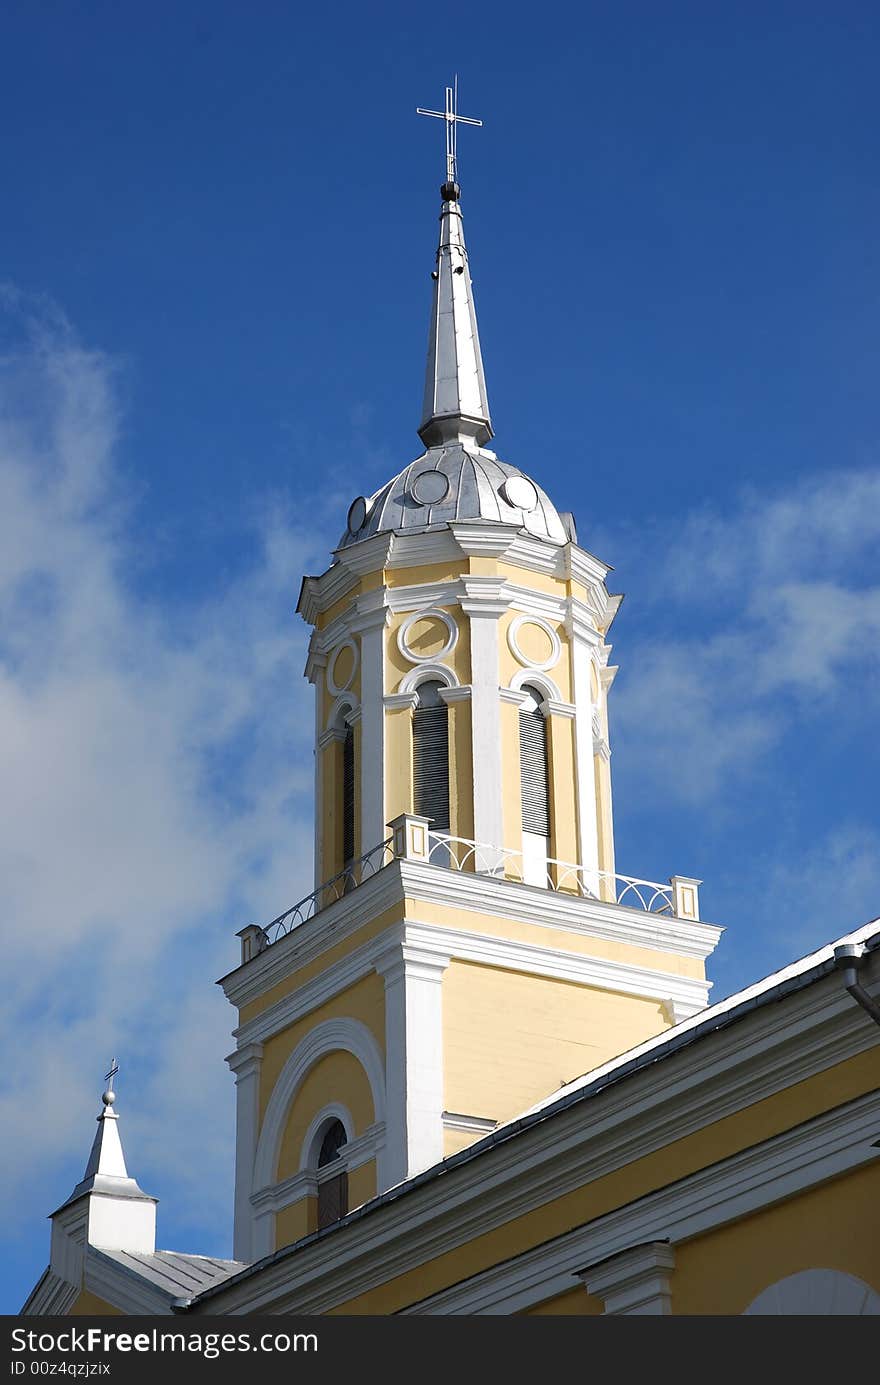 The catholic church in Kavarskas city, Lithuania